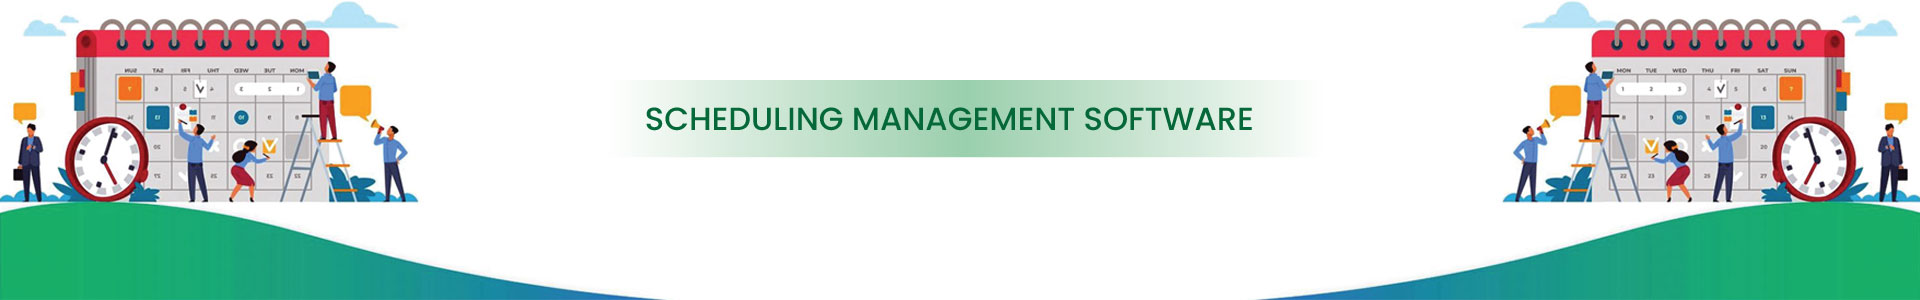 Scheduling-Management Software